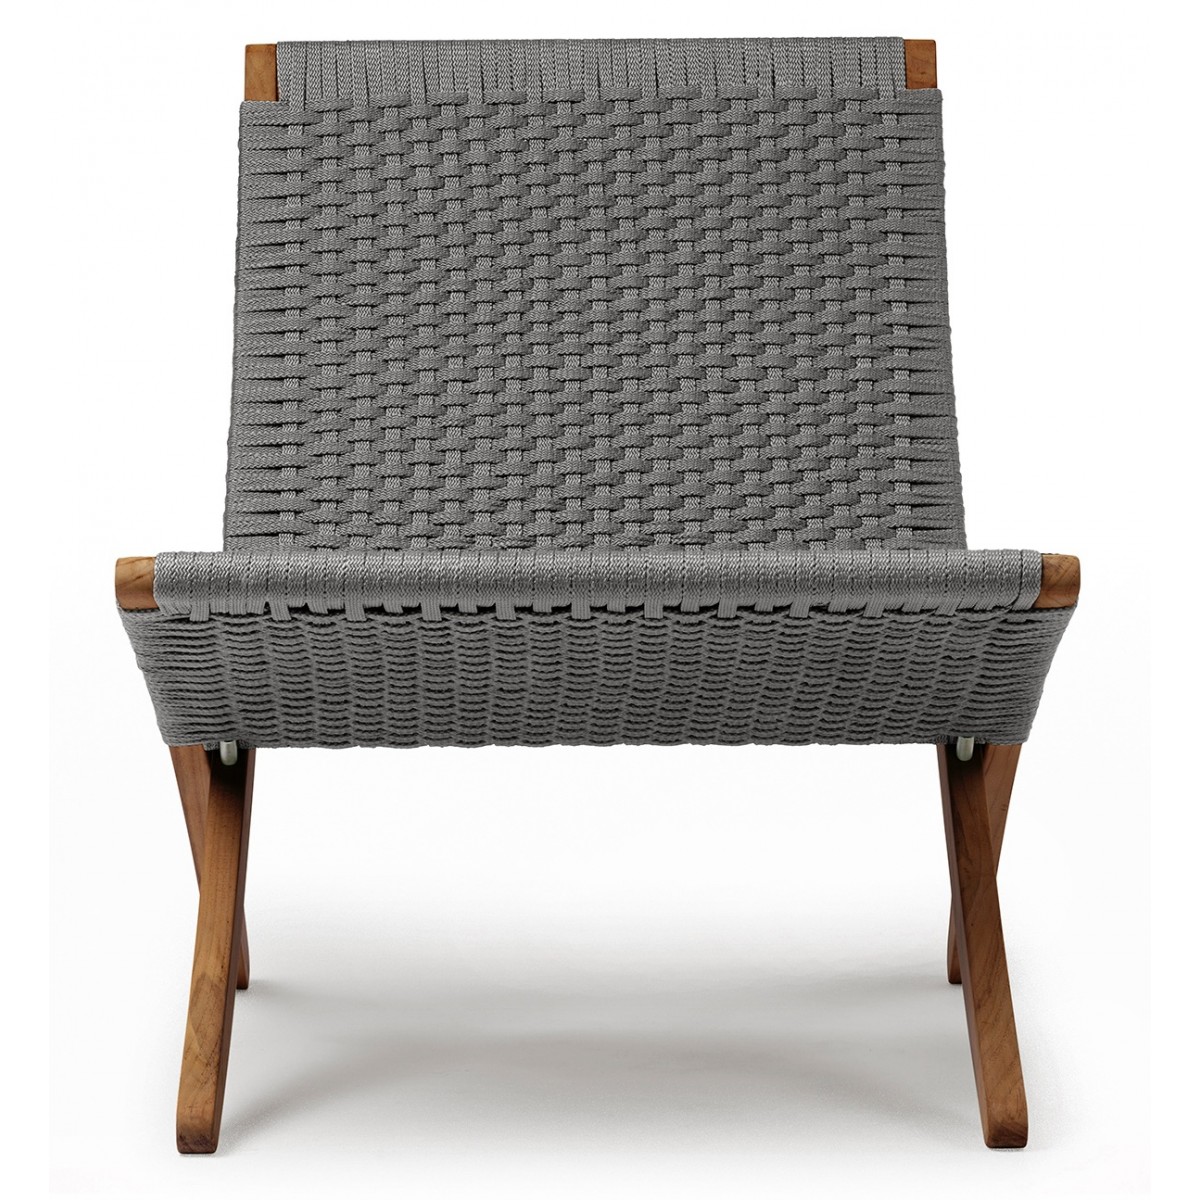 EPUISE - CARL HANSEN - Charcoal - fauteuil Cuba MG501 Outdoor - OFFER